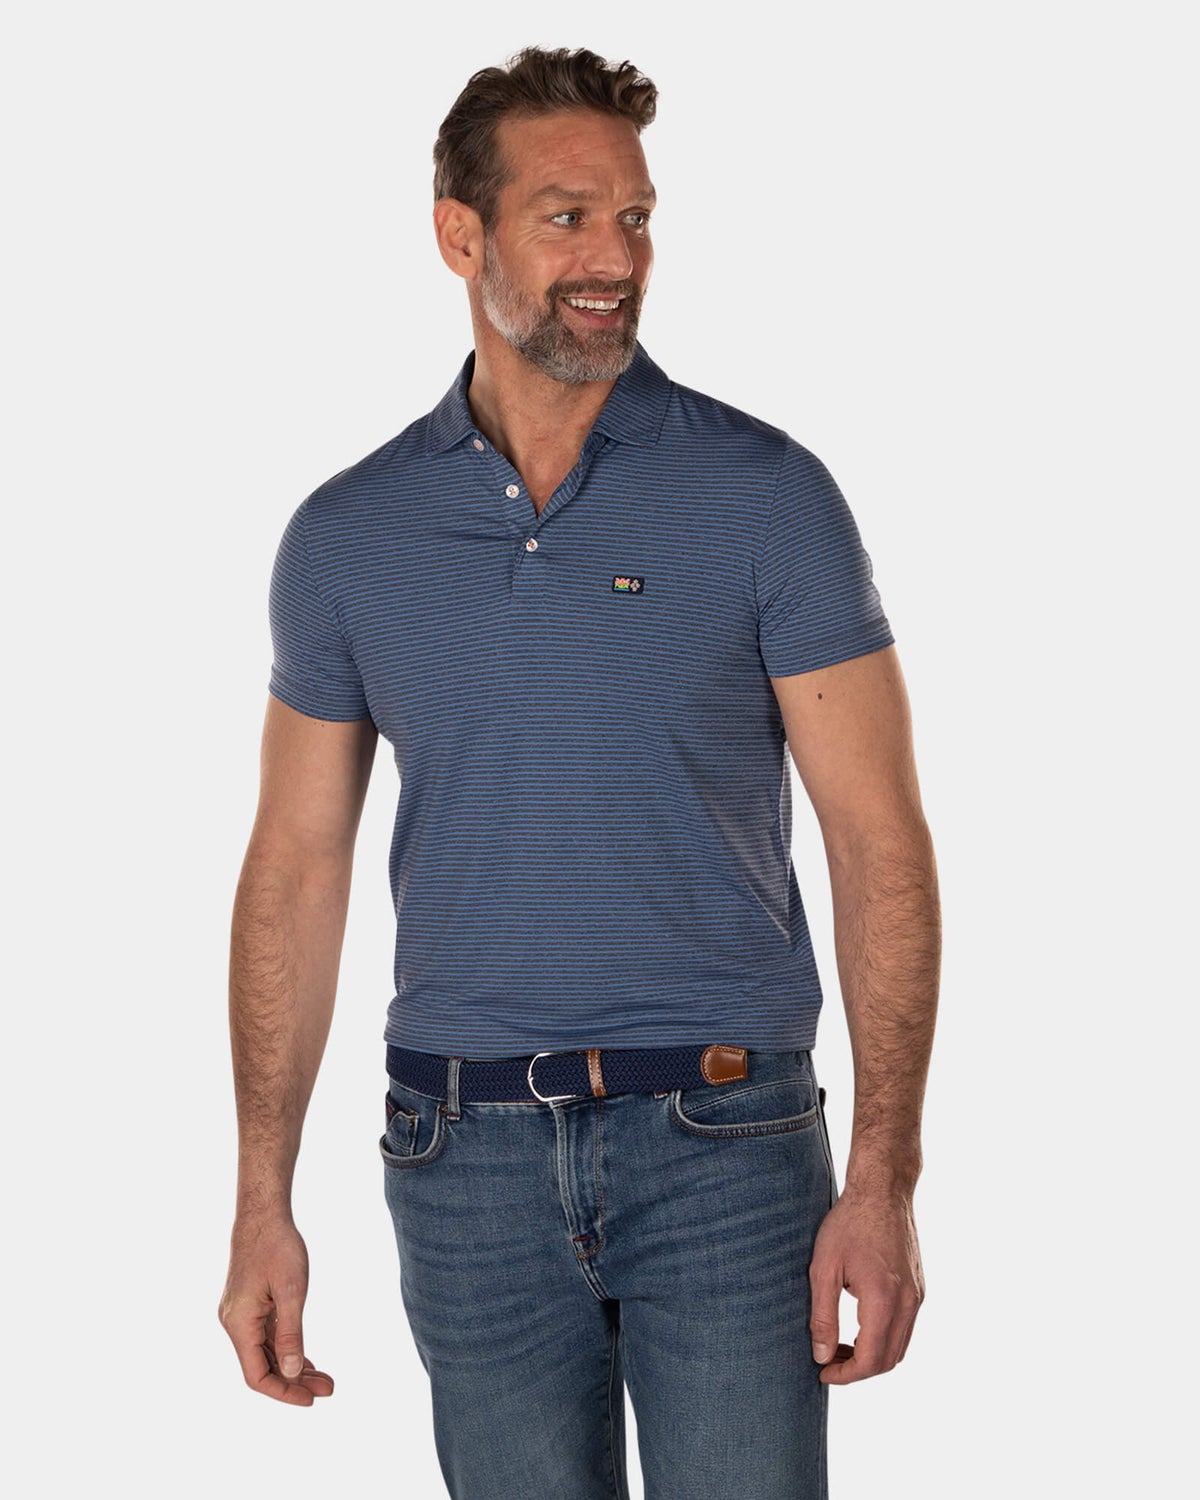 Plain polo shirt with small stripes